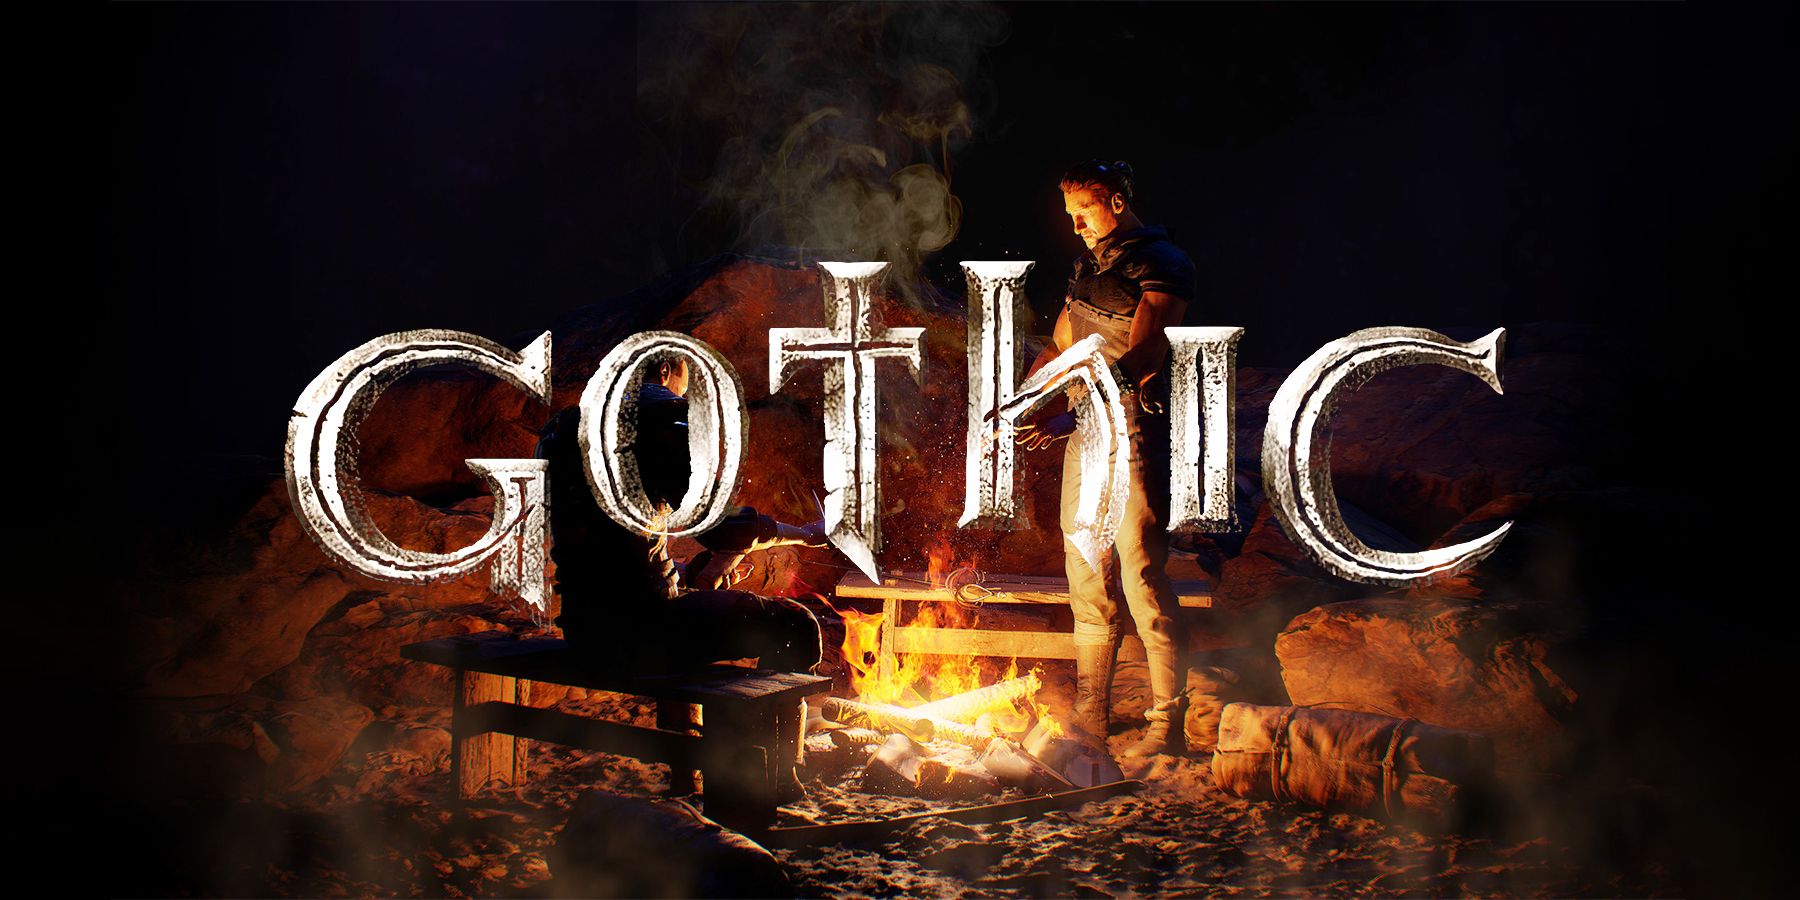 Gothic Remake small camp promo screenshot with original game logo overlay